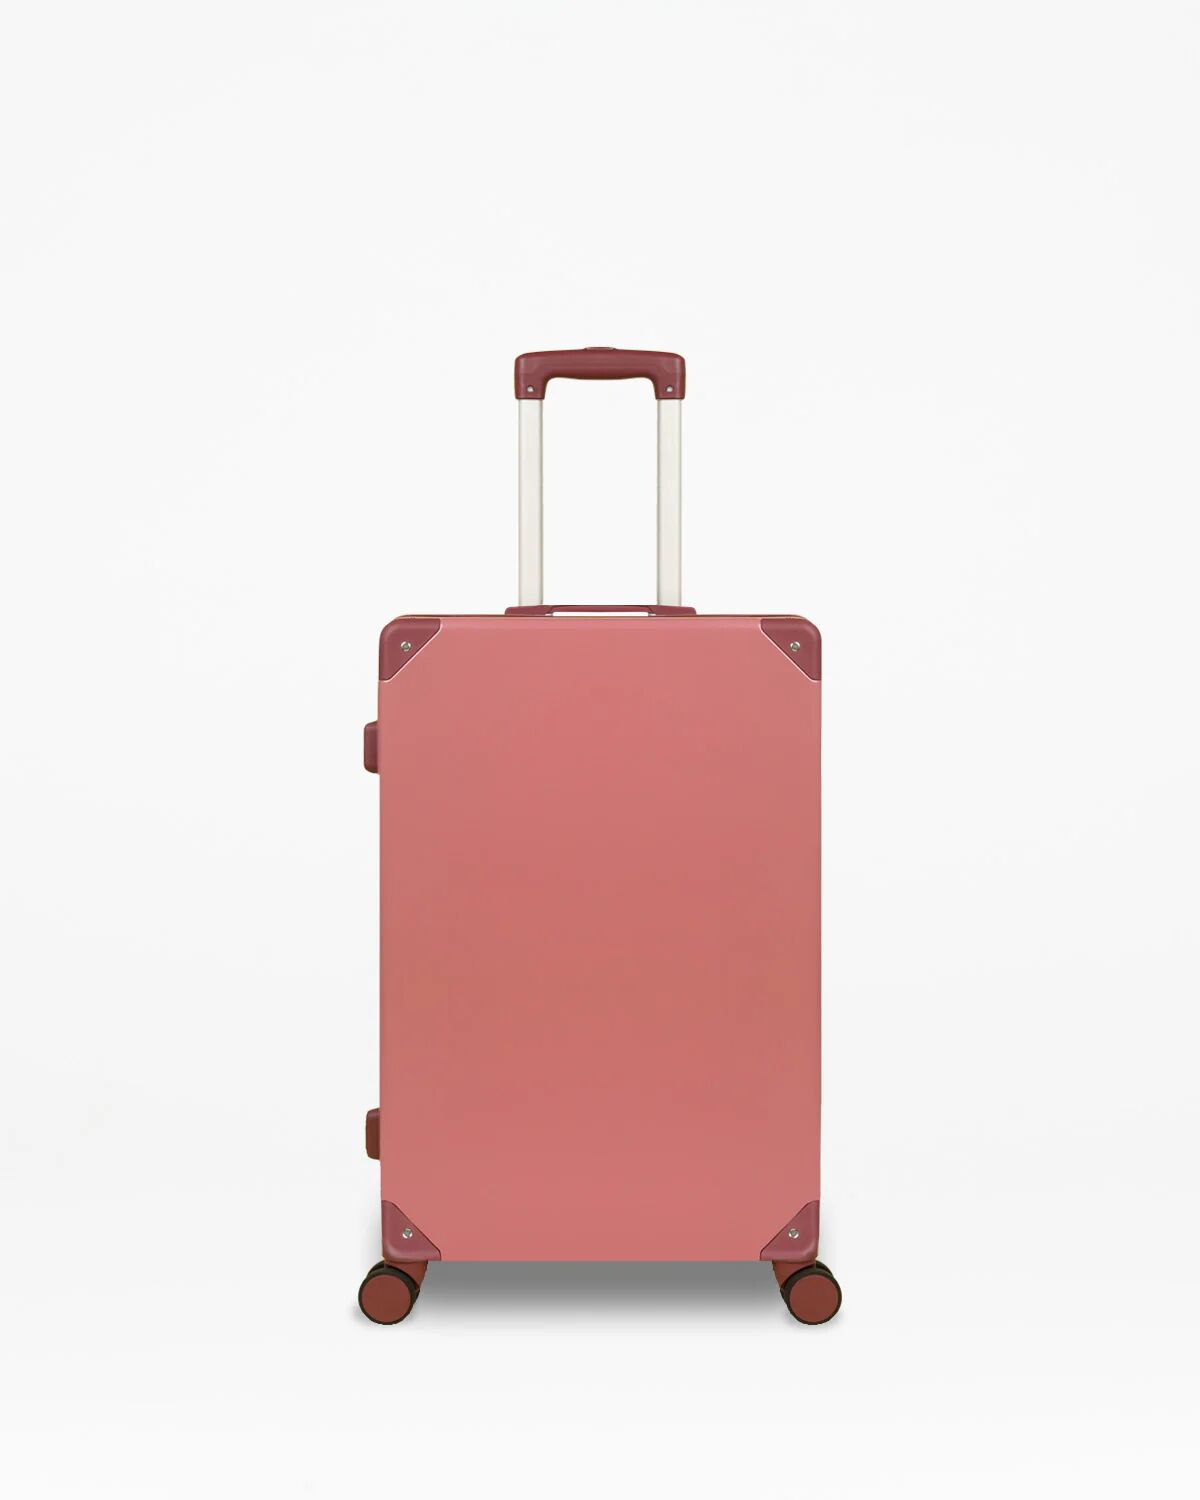 Fenella Smith Cabo Dusty Pink Suitcase - Cabo Medium Dusty Pink Suitcase Unisex